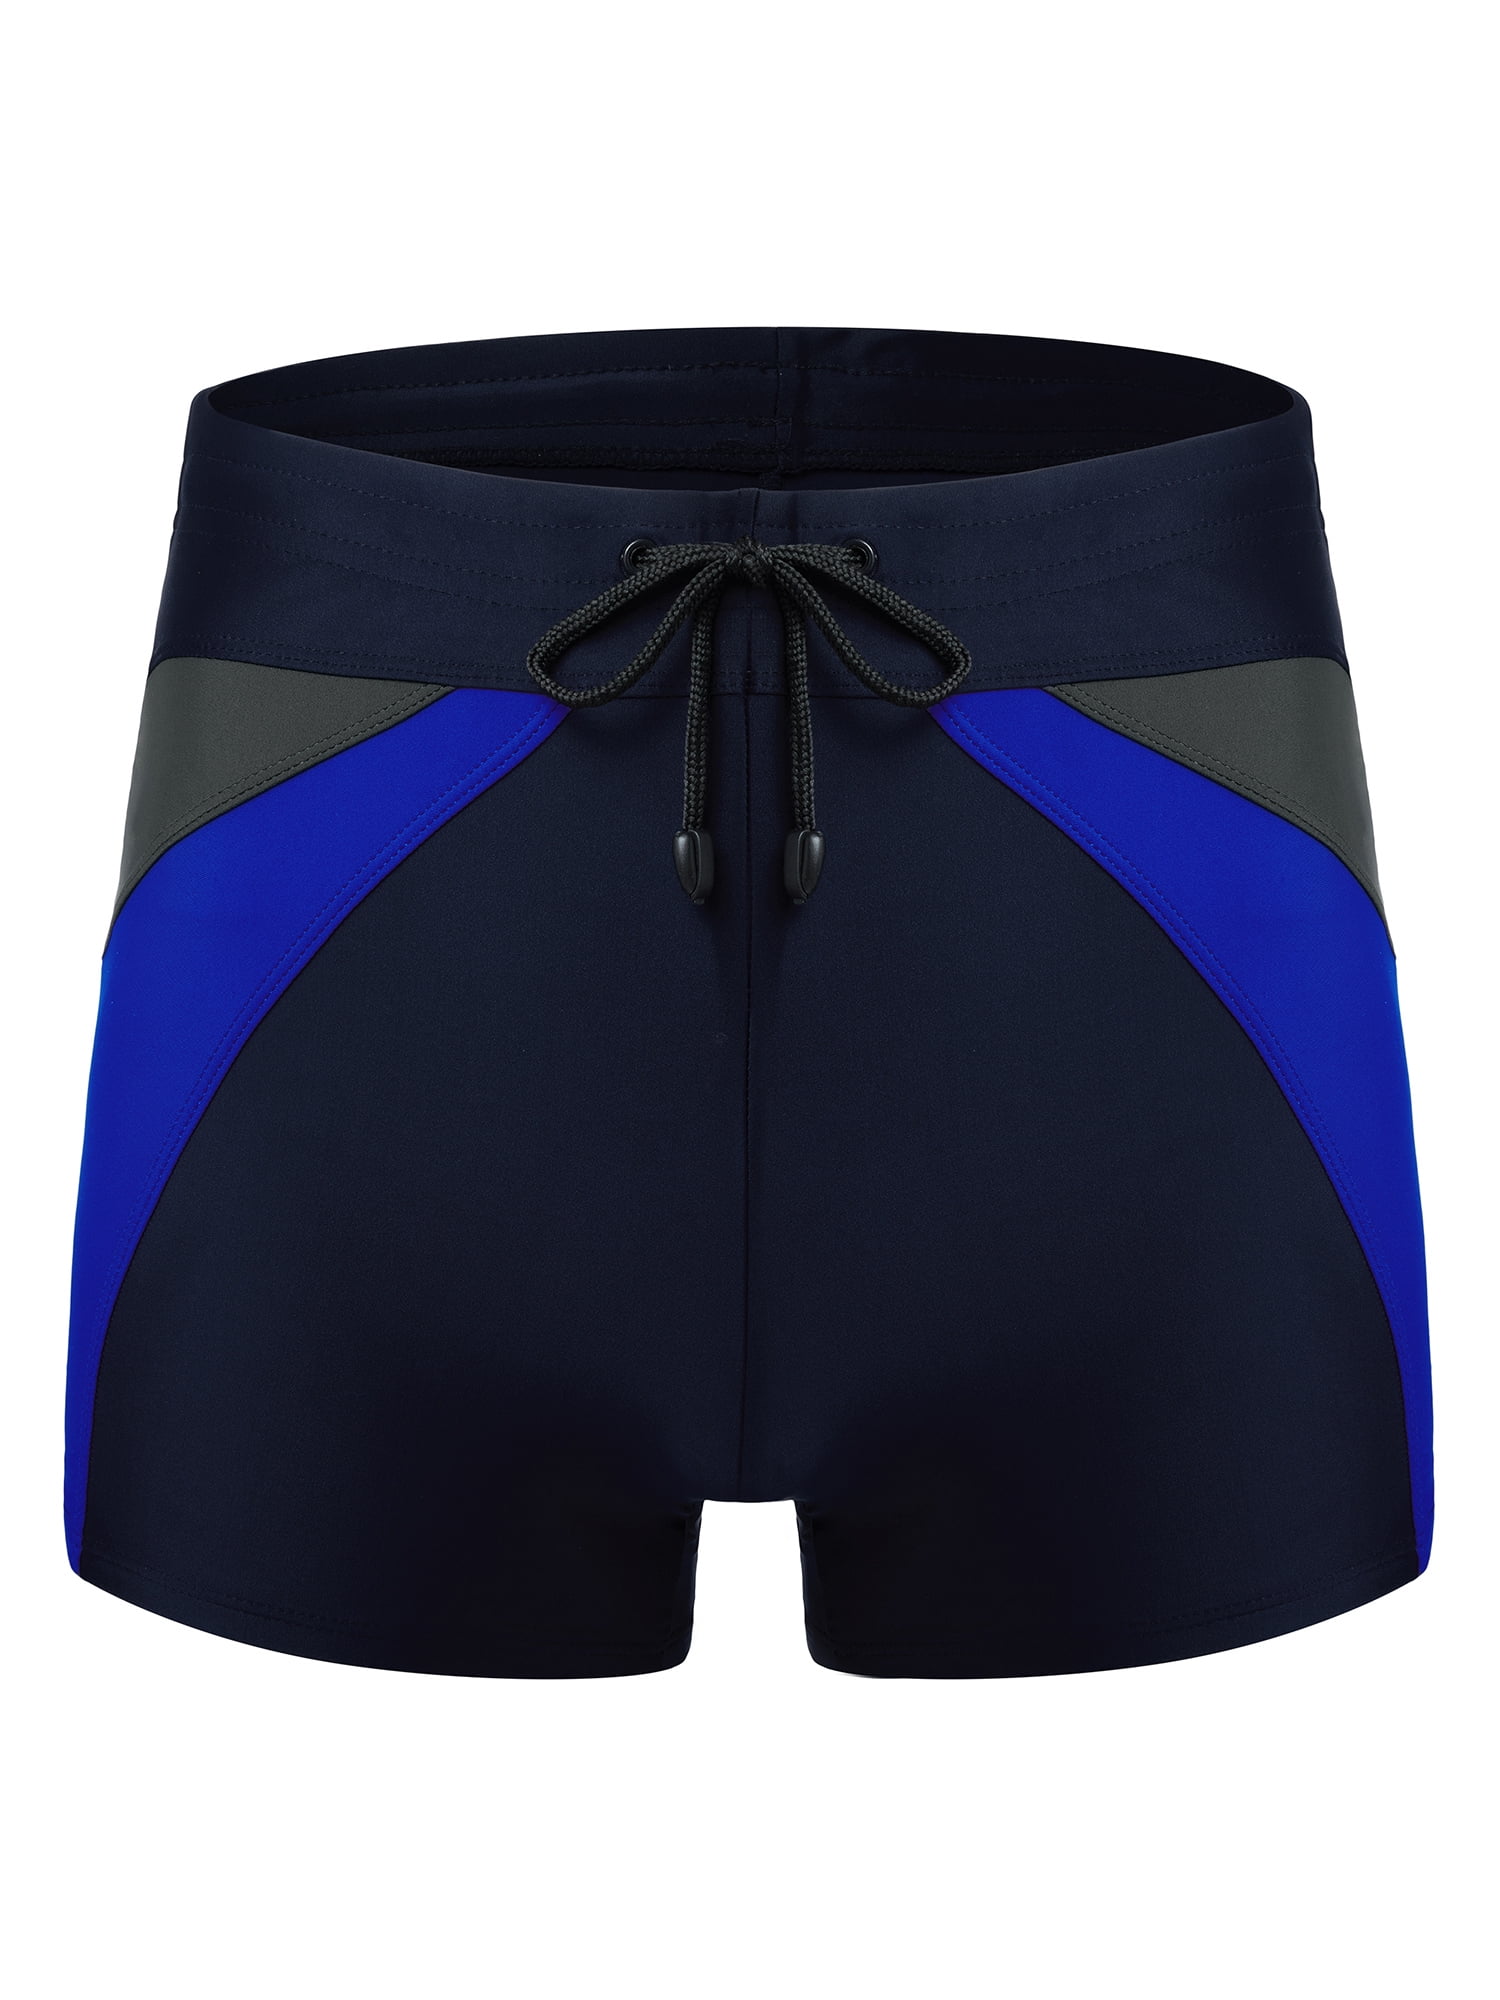 Aqua Sphere PENN Mens Swimming Jammers Trunks Shorts Swim Shorts Male Swimwear 